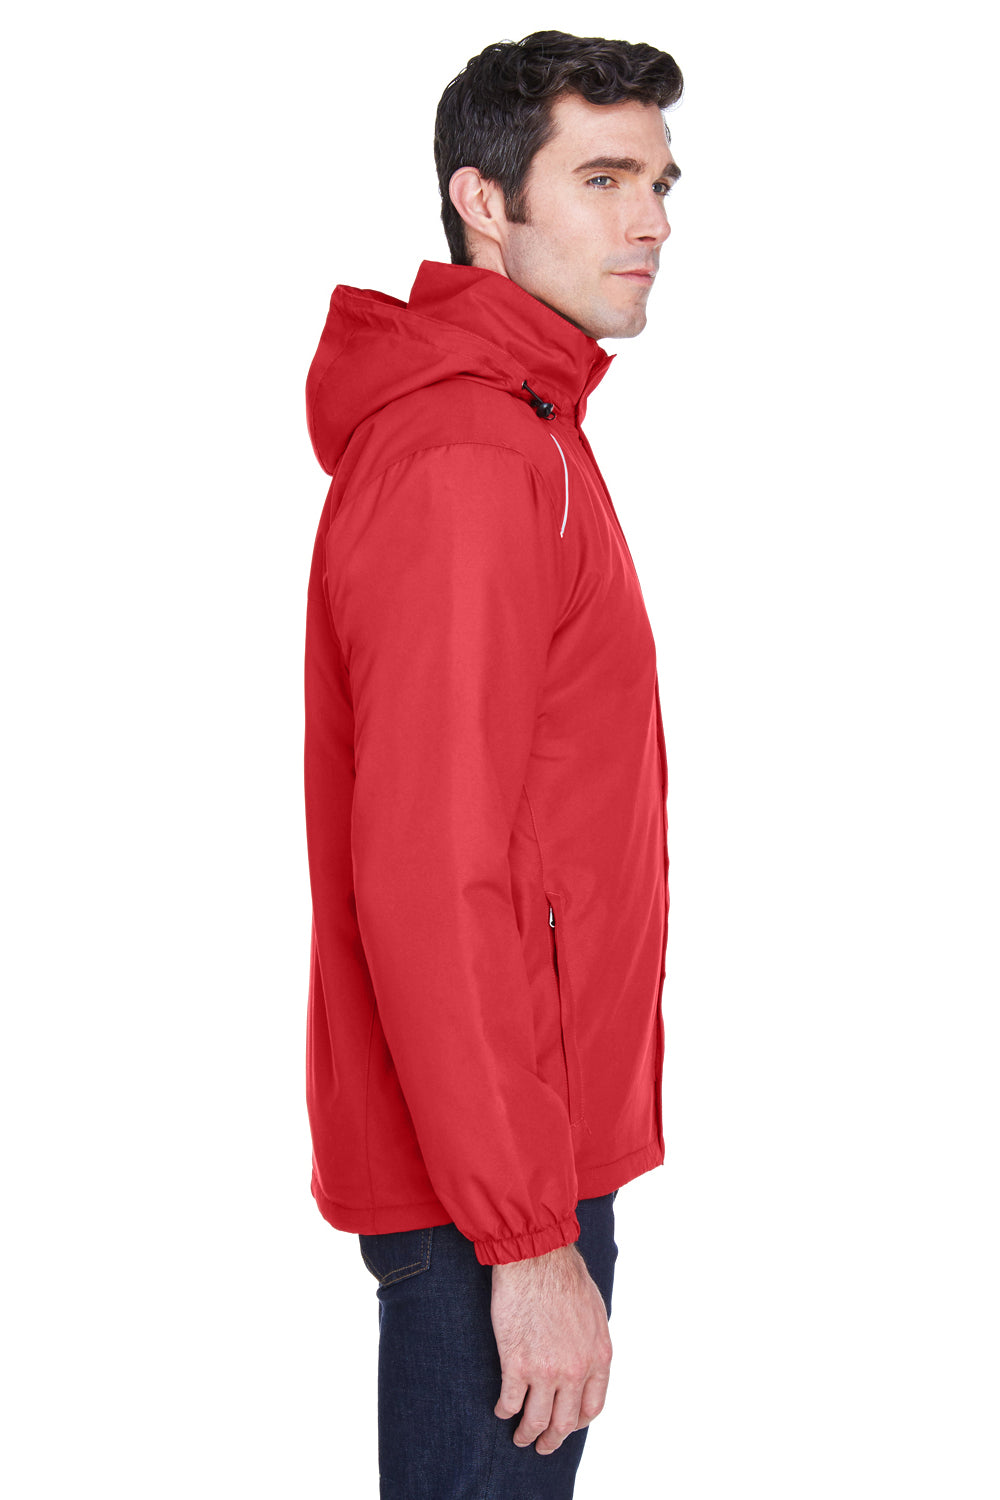 Core 365 88189 Mens Brisk Full Zip Hooded Jacket Red Side